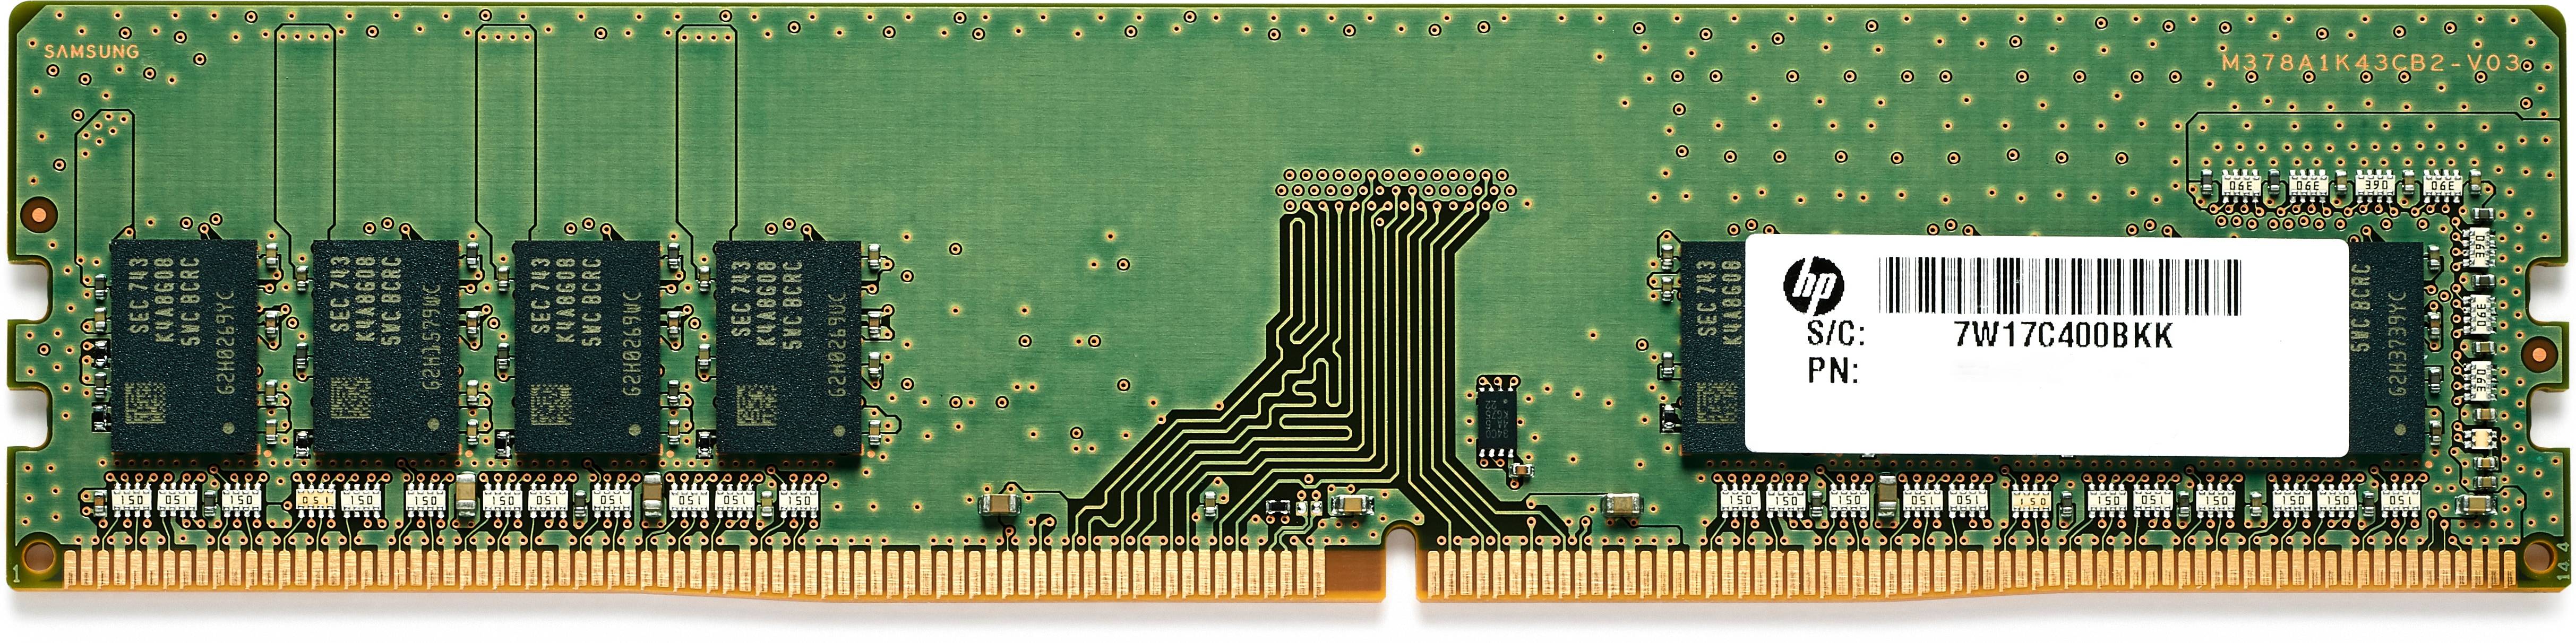 Rca Informatique - Image du produit : 8GB DDR4 2933 NECC UDIMM F/ DEDICATED WORKSTATION